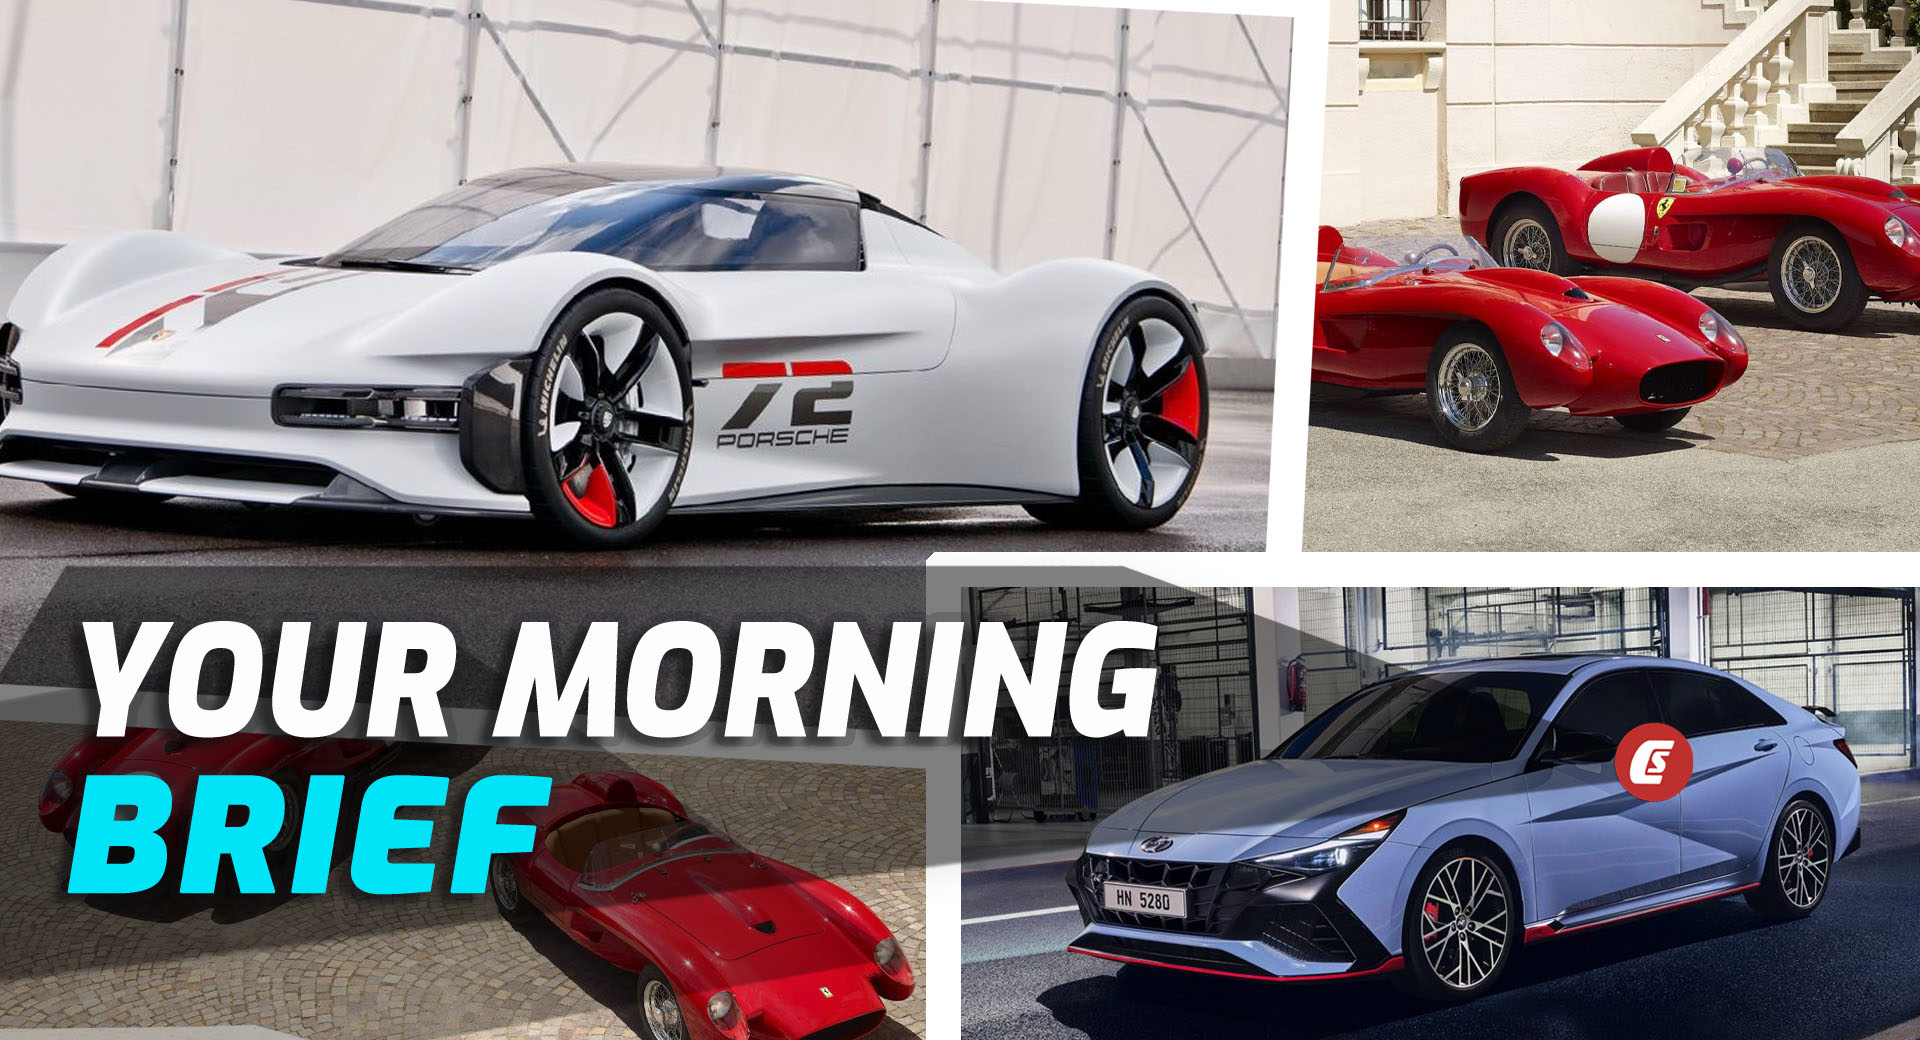 Porsche Vision GT, Australias i30 Sedan N, And 45mph Electric Ferrari Your Morning Brief Carscoops photo pic